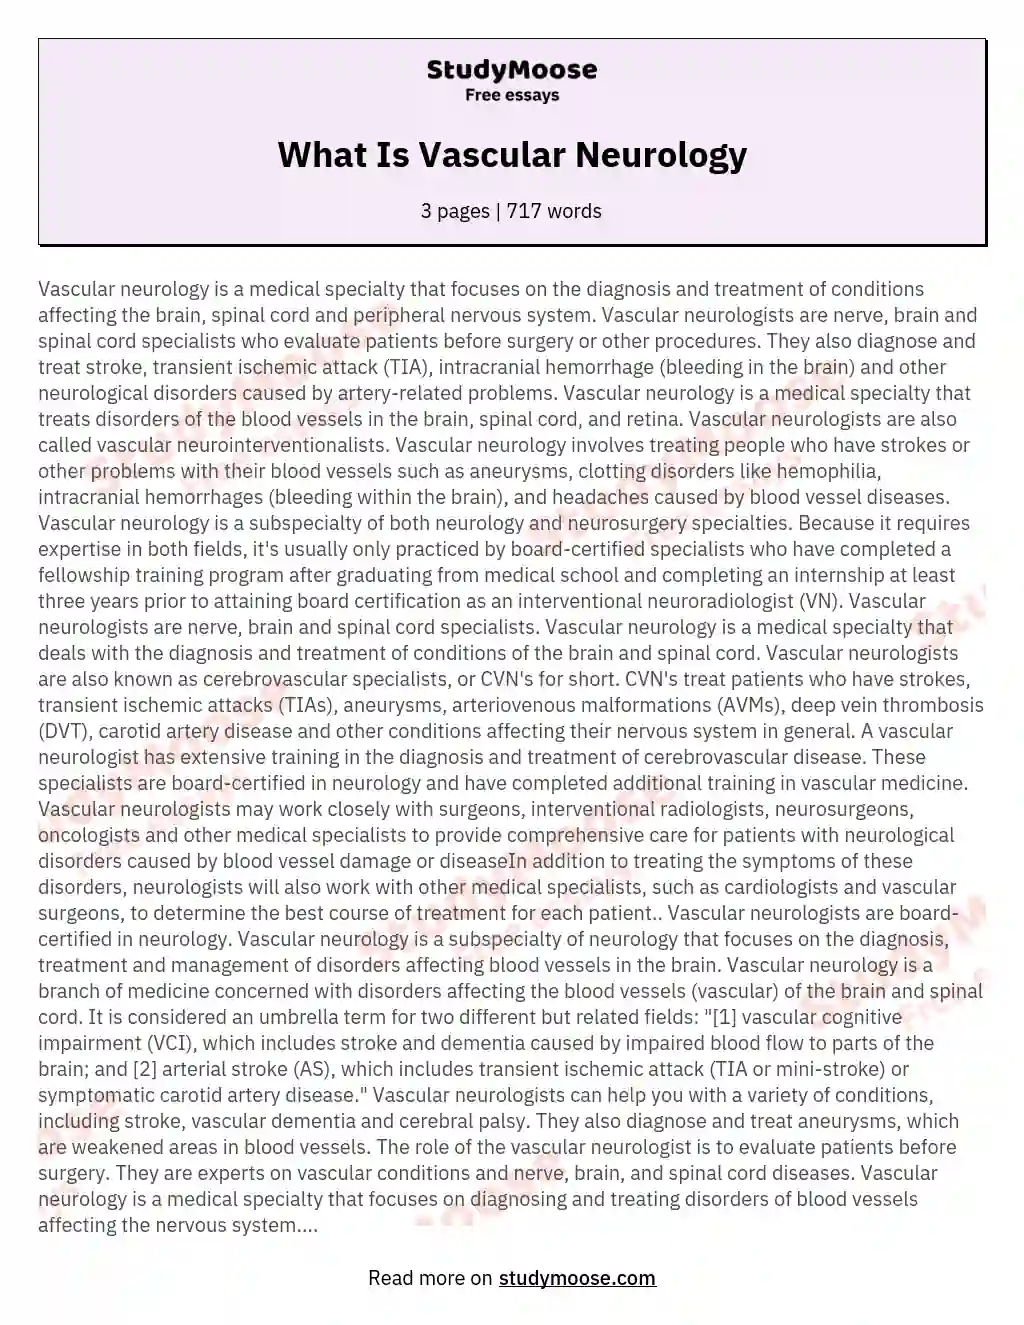 What Is Vascular Neurology essay